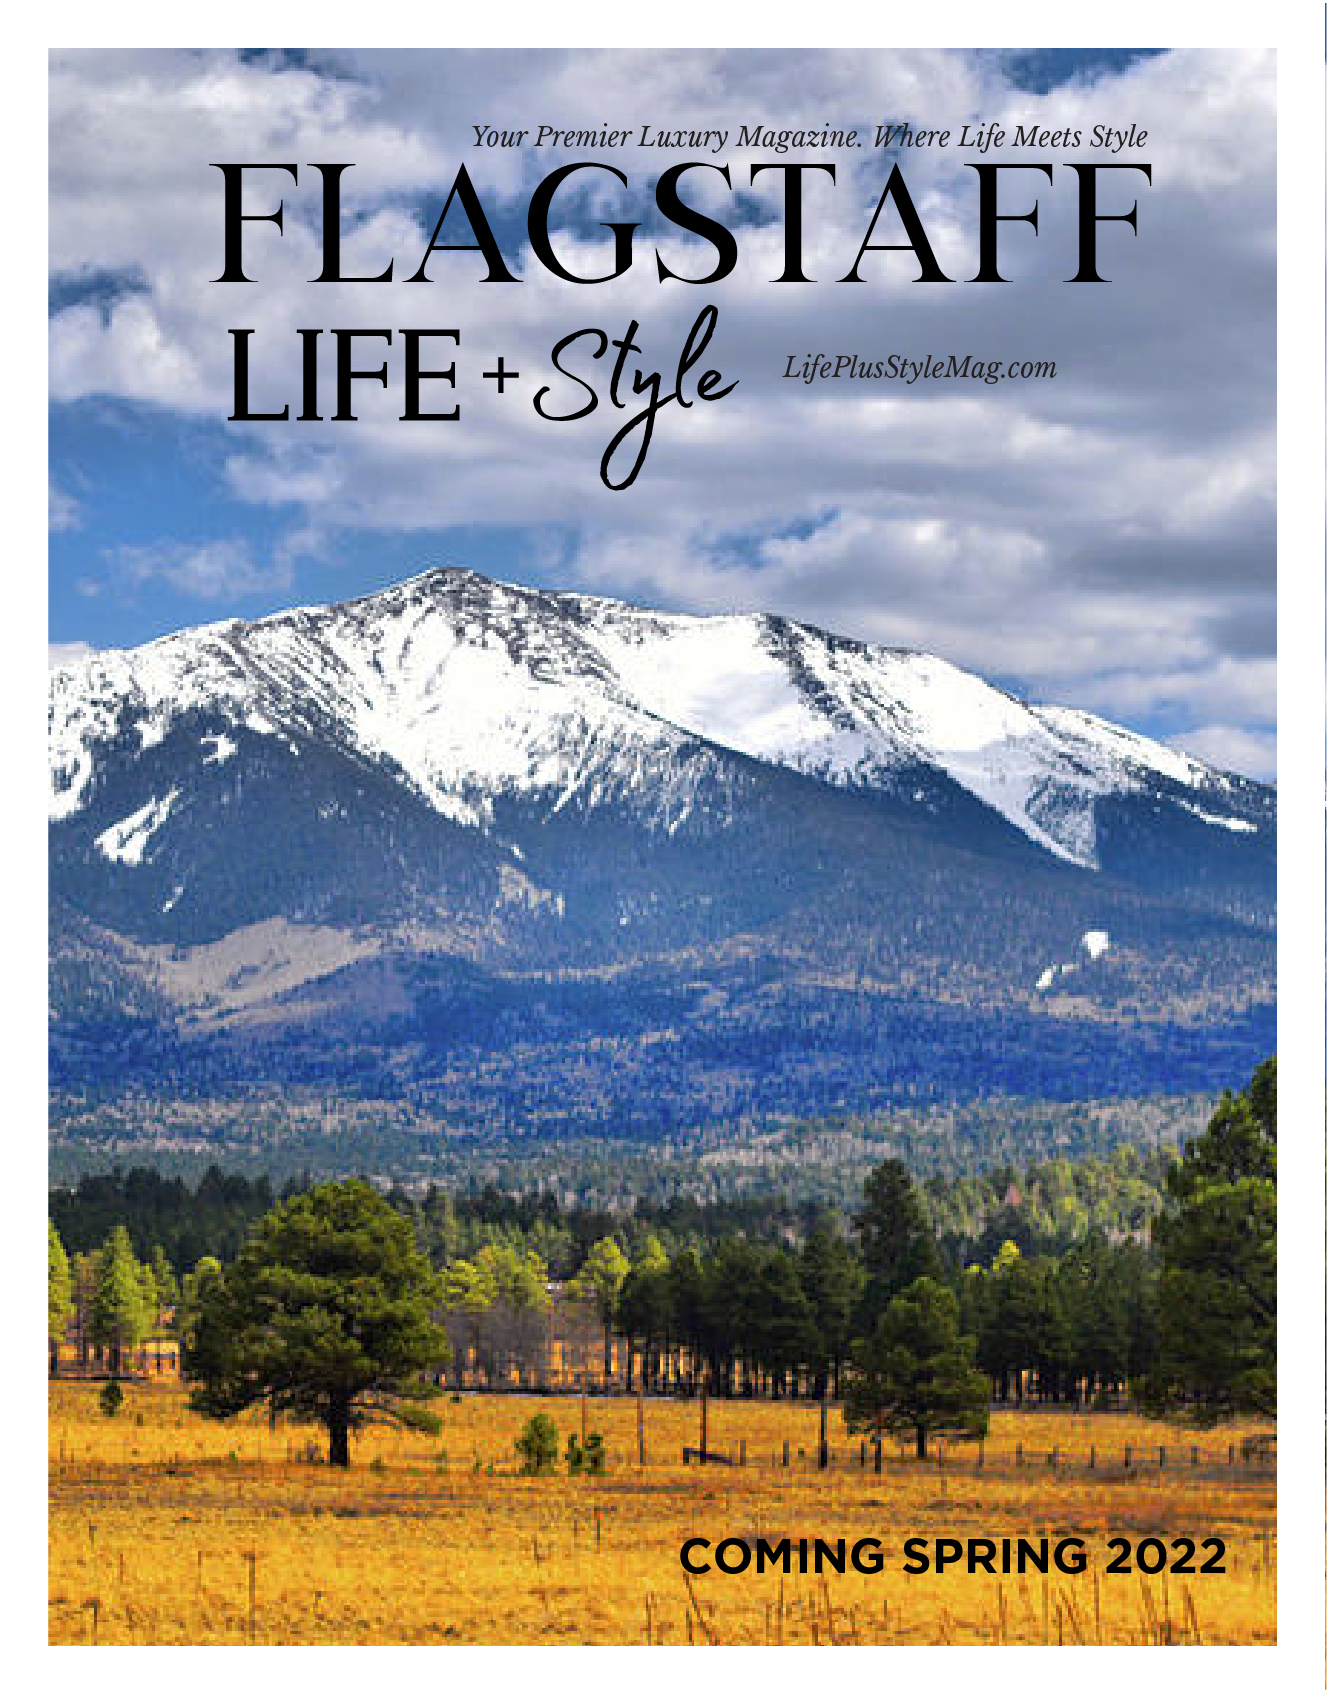 Flagstaff Life + Style Magazine, Flagstaff, Life Plus Style Magazine